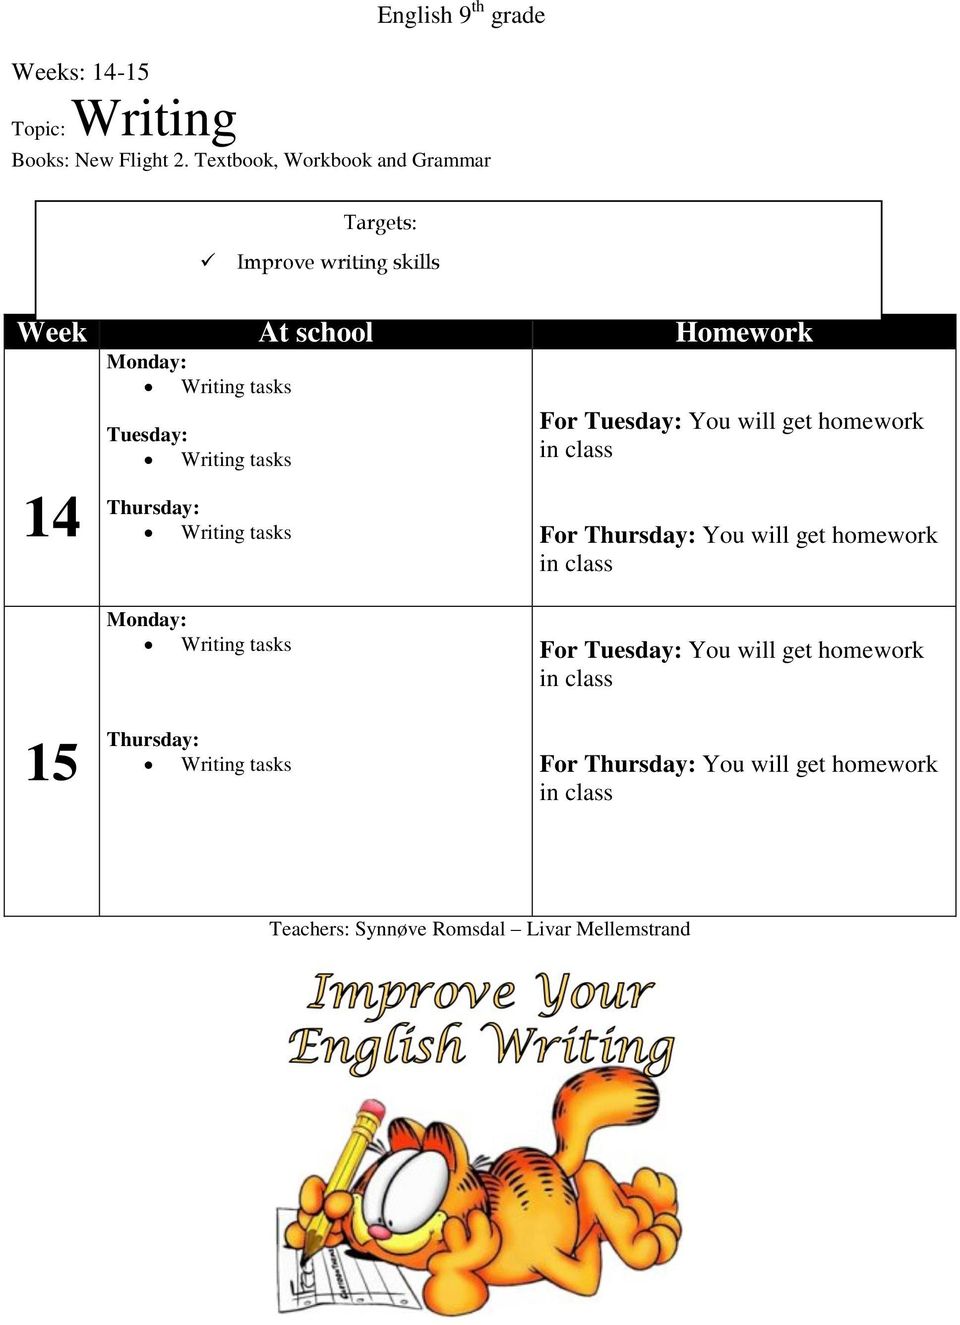 Writing tasks Thursday: Writing tasks For Tuesday: You will get homework in class For Thursday: You will get homework in